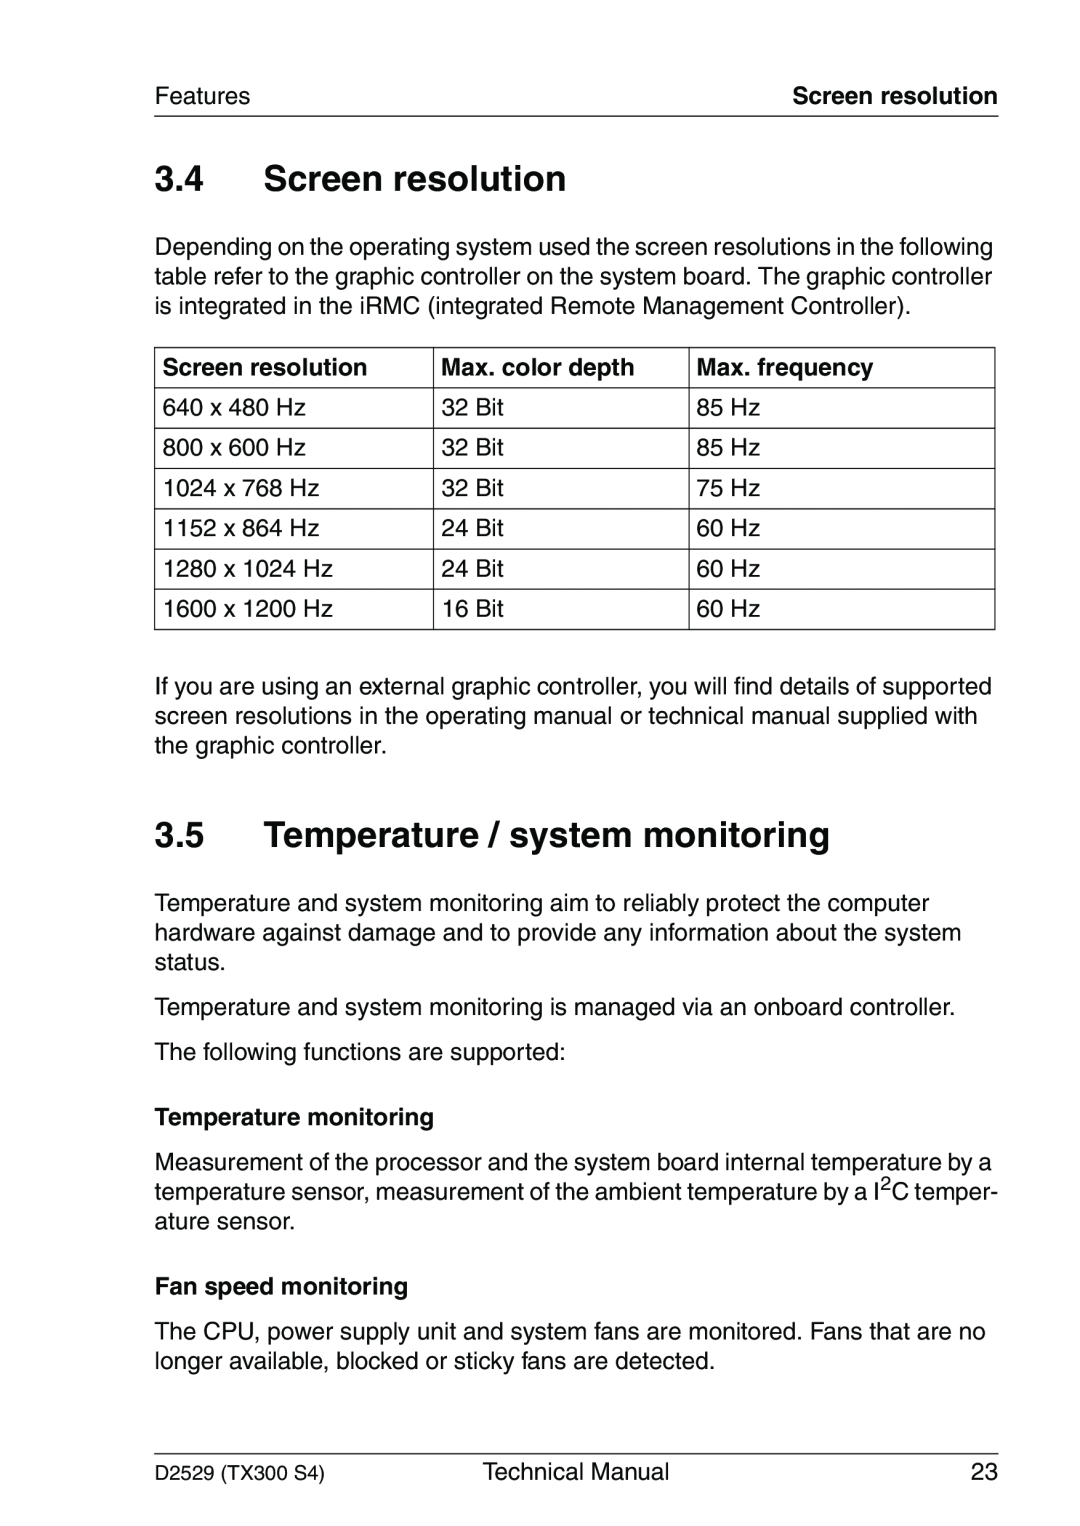 Fujitsu D2529 Screen resolution, Temperature / system monitoring, Max. color depth, Max. frequency, Temperature monitoring 